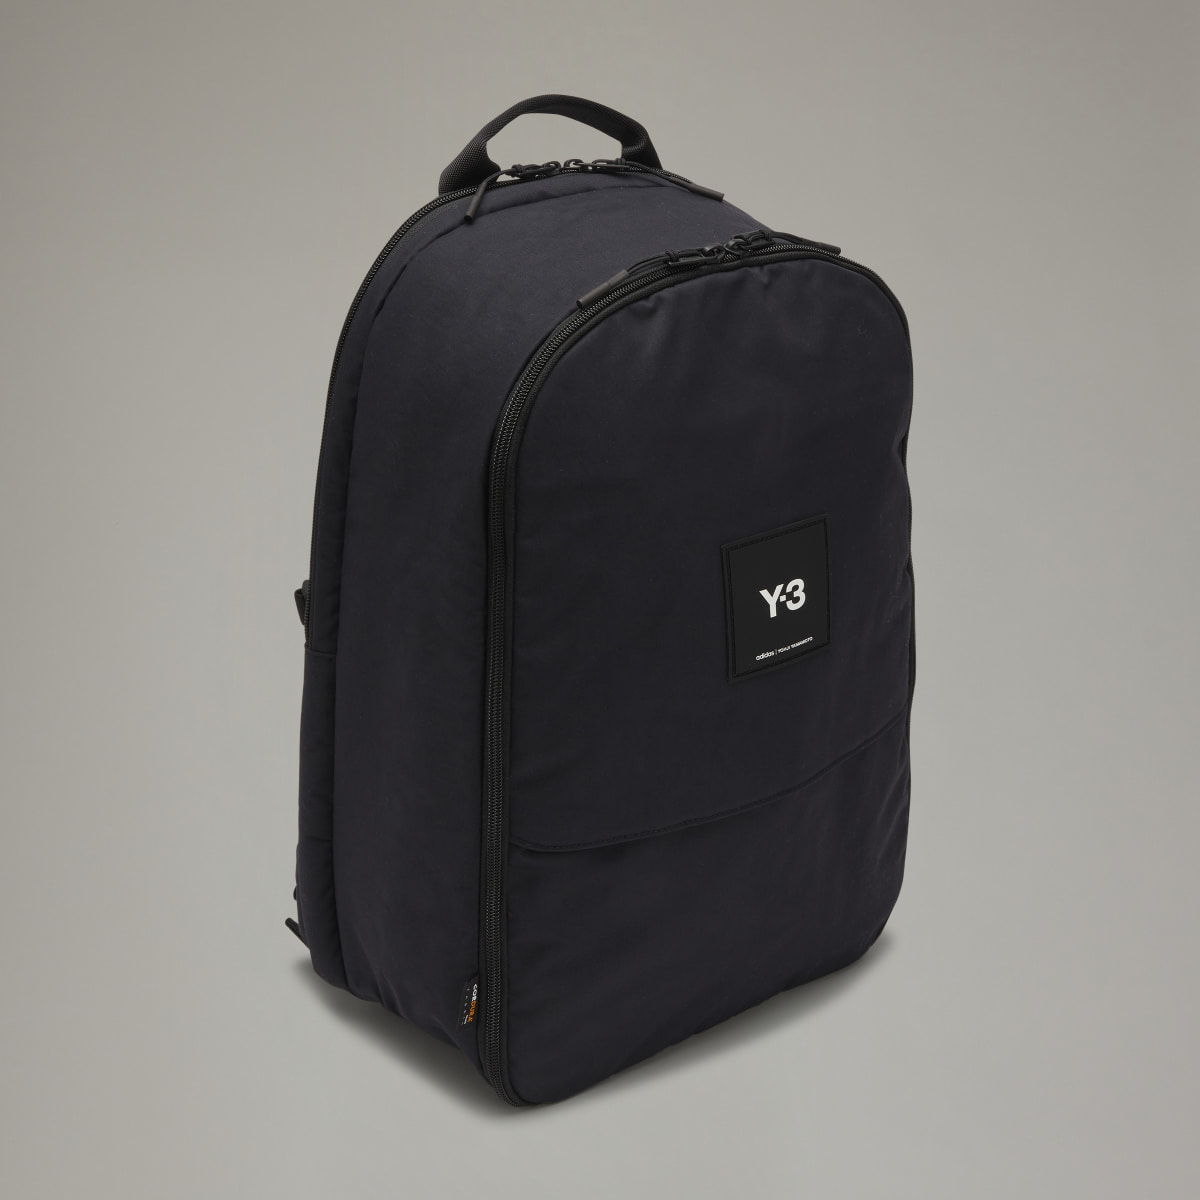 Adidas Y-3 Tech Backpack. 4